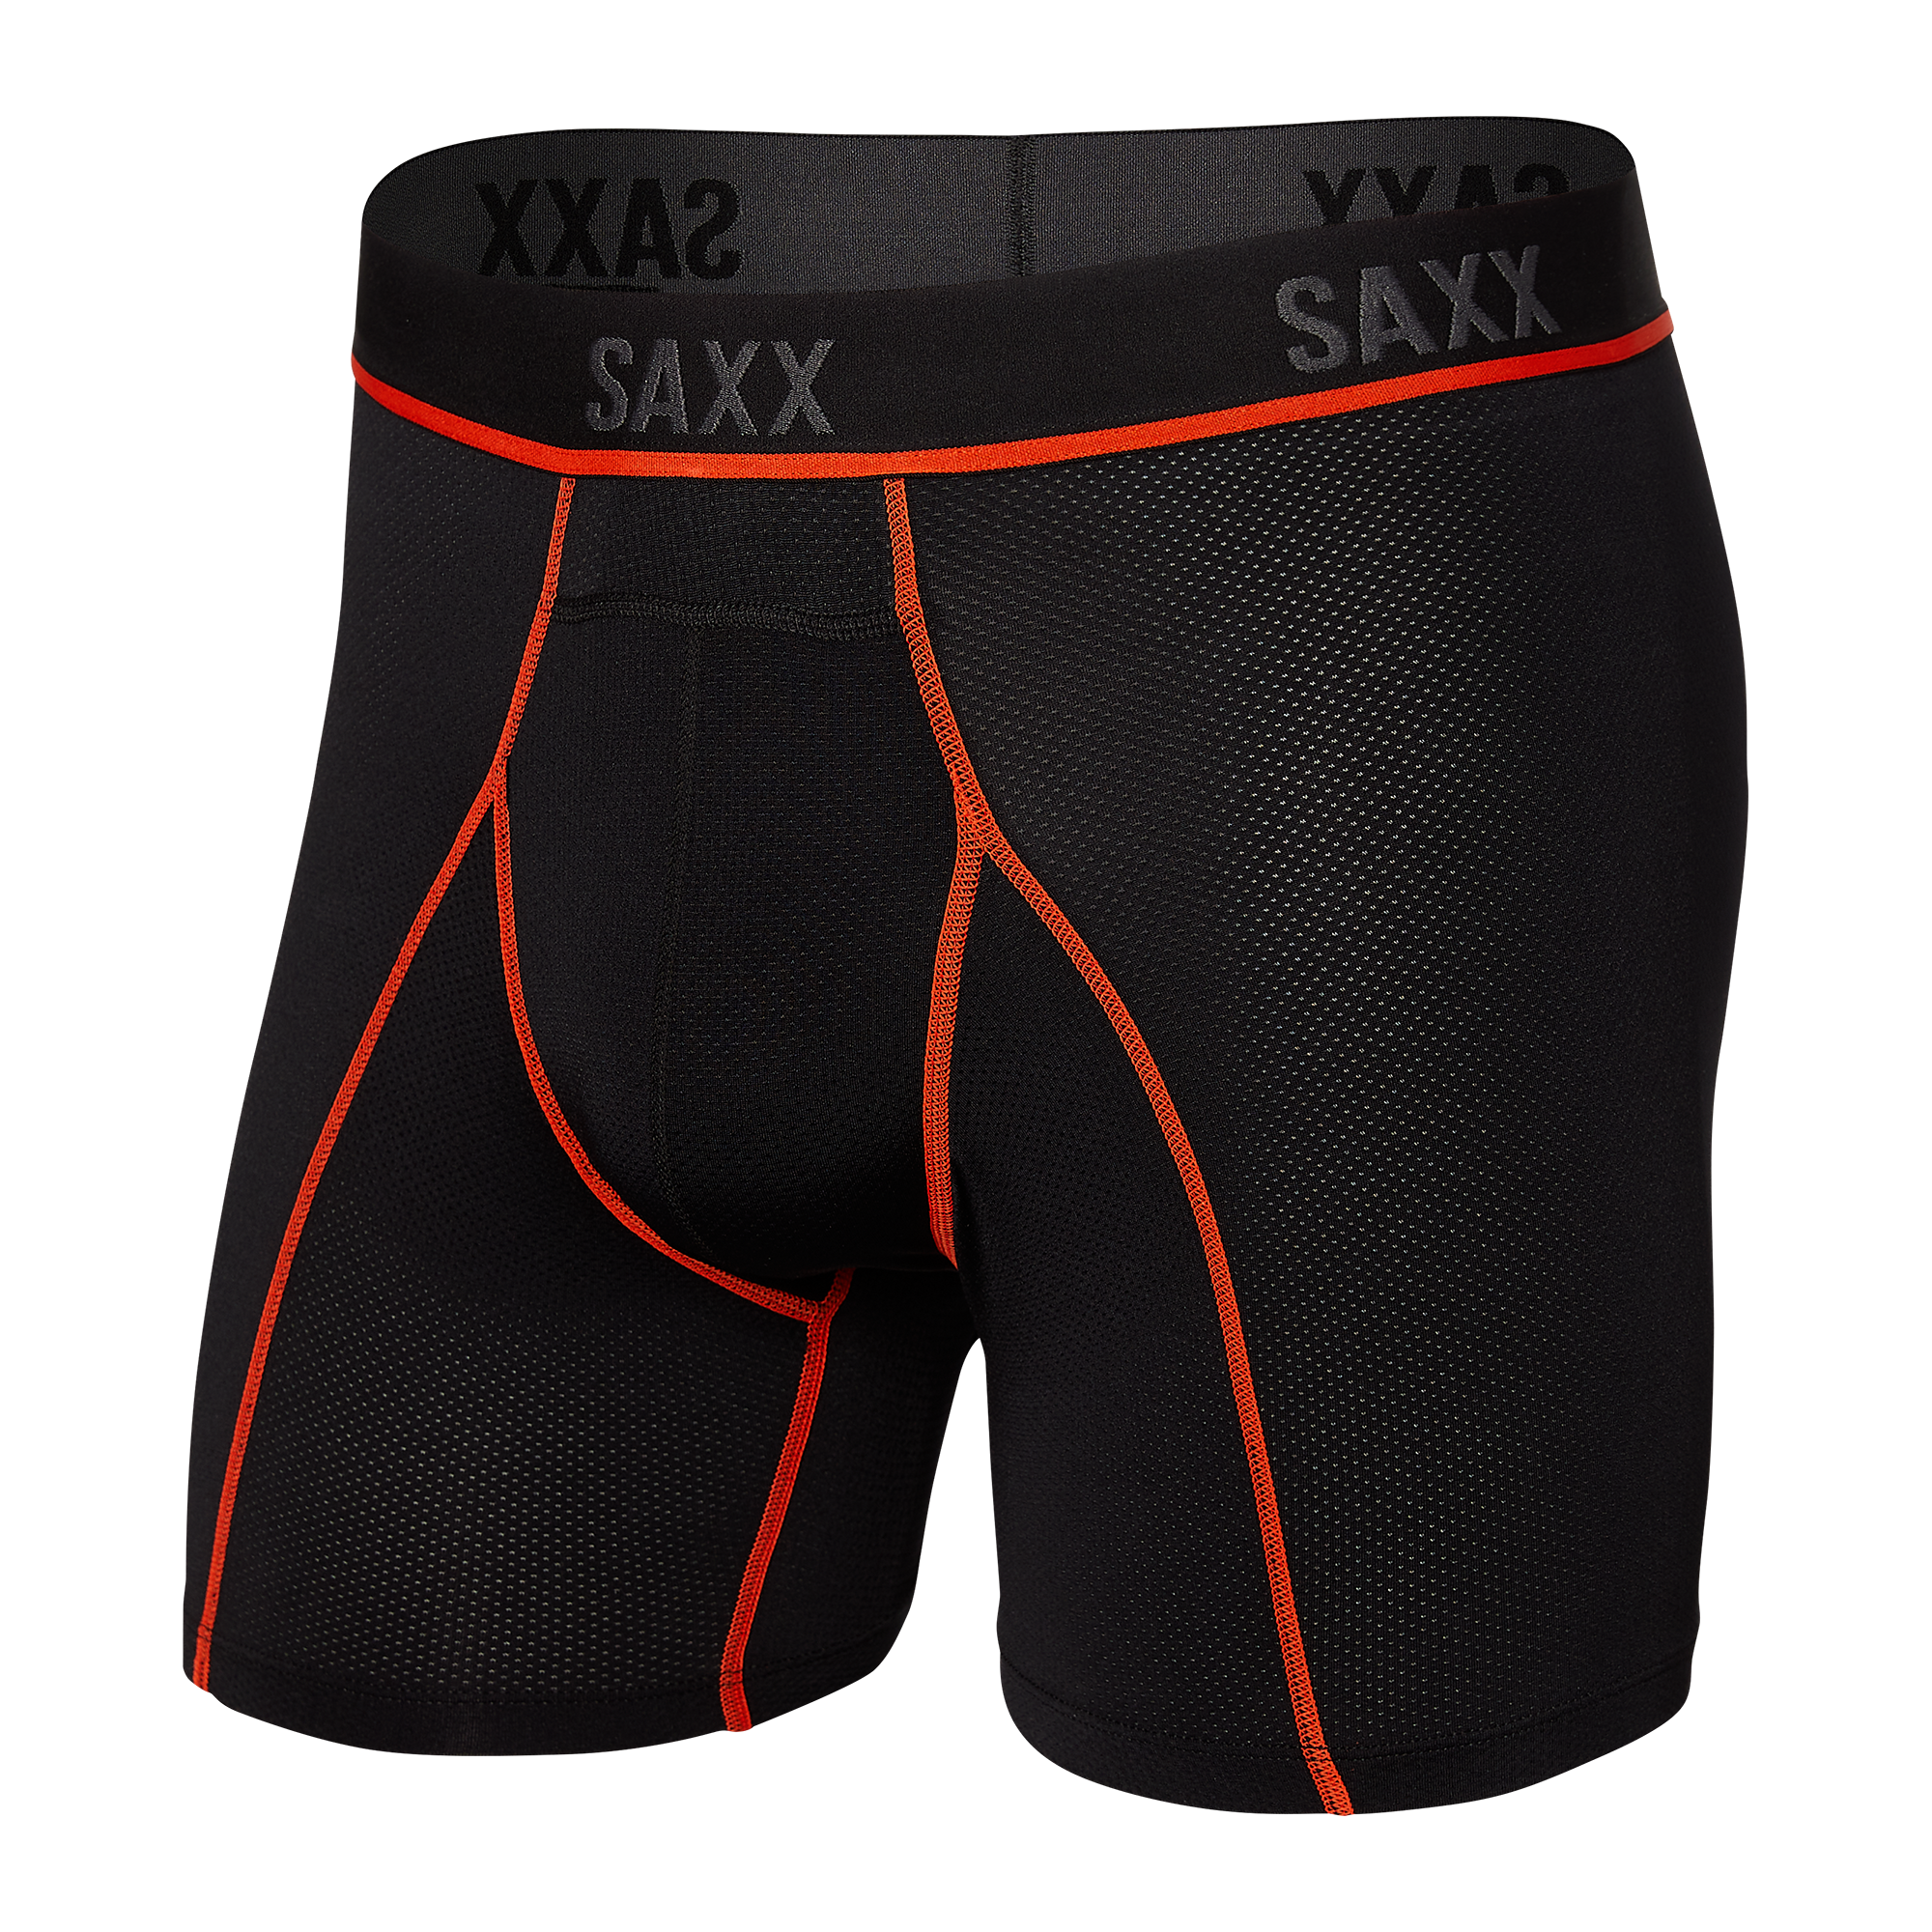  KINETIC BOXER BRIEF black/tide - boxers - SAXX - 28.38 € -  outdoorové oblečení a vybavení shop